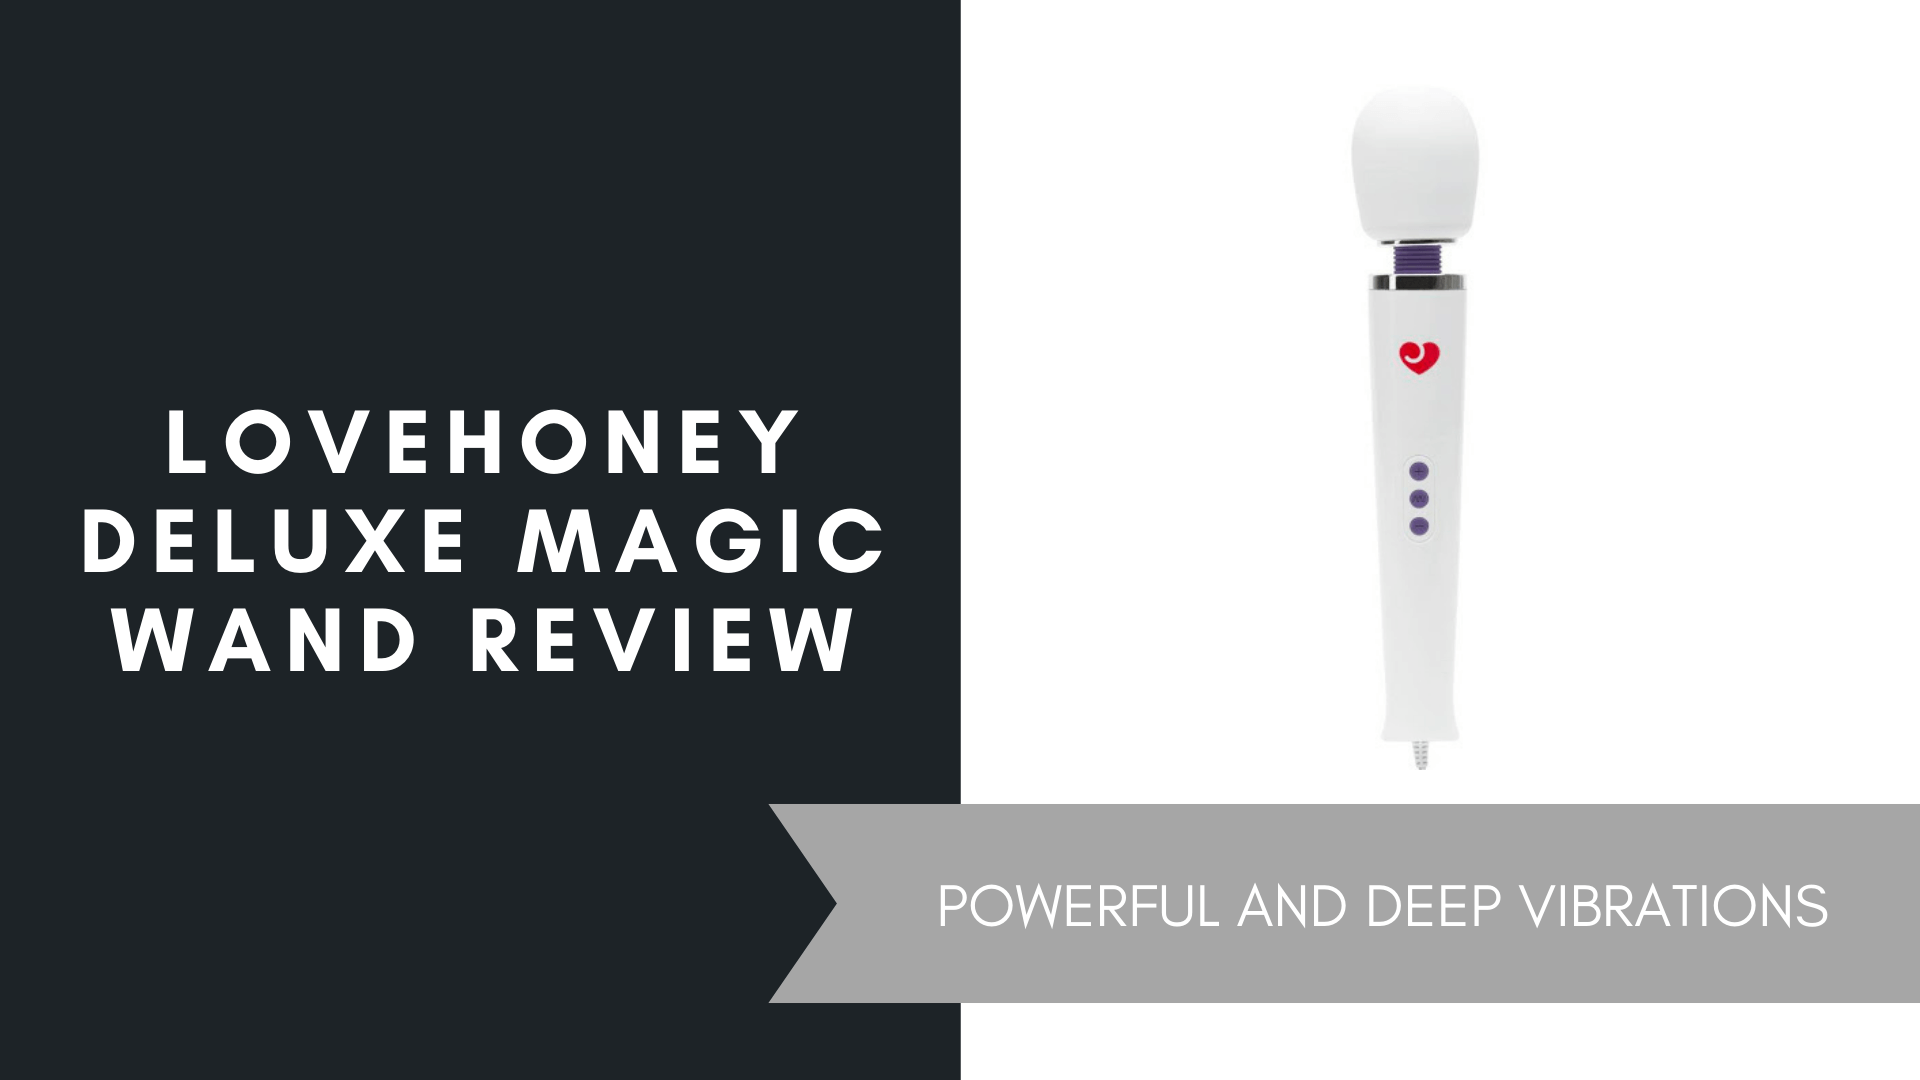 Lovehoney Deluxe Magic Wand Review, June 2021